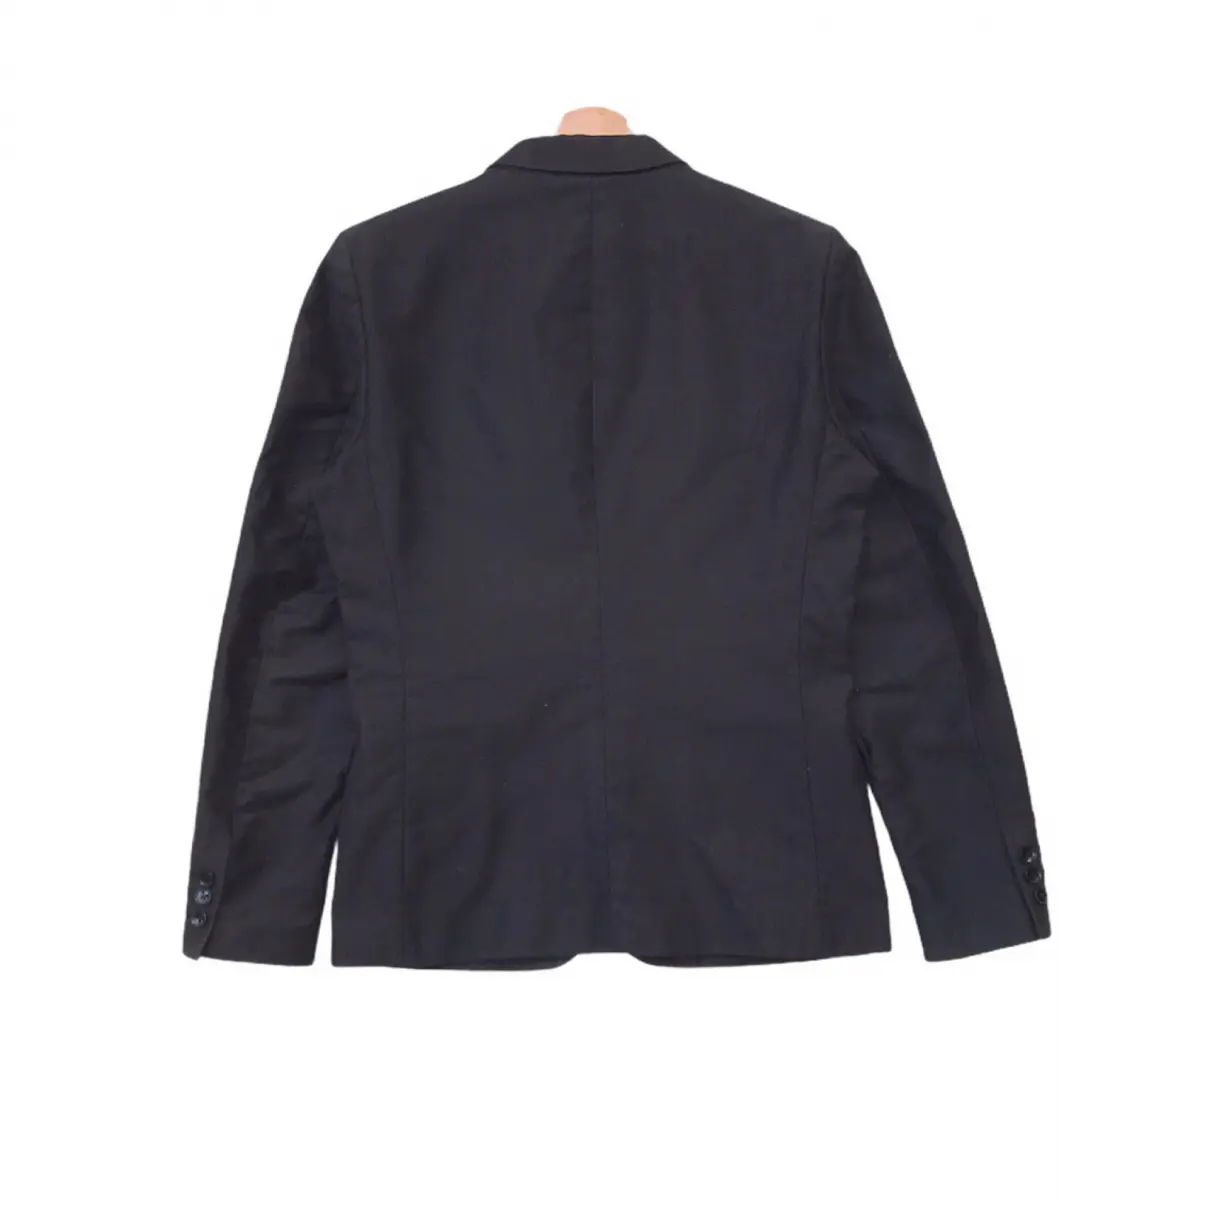 Buy Dior Homme Jacket online